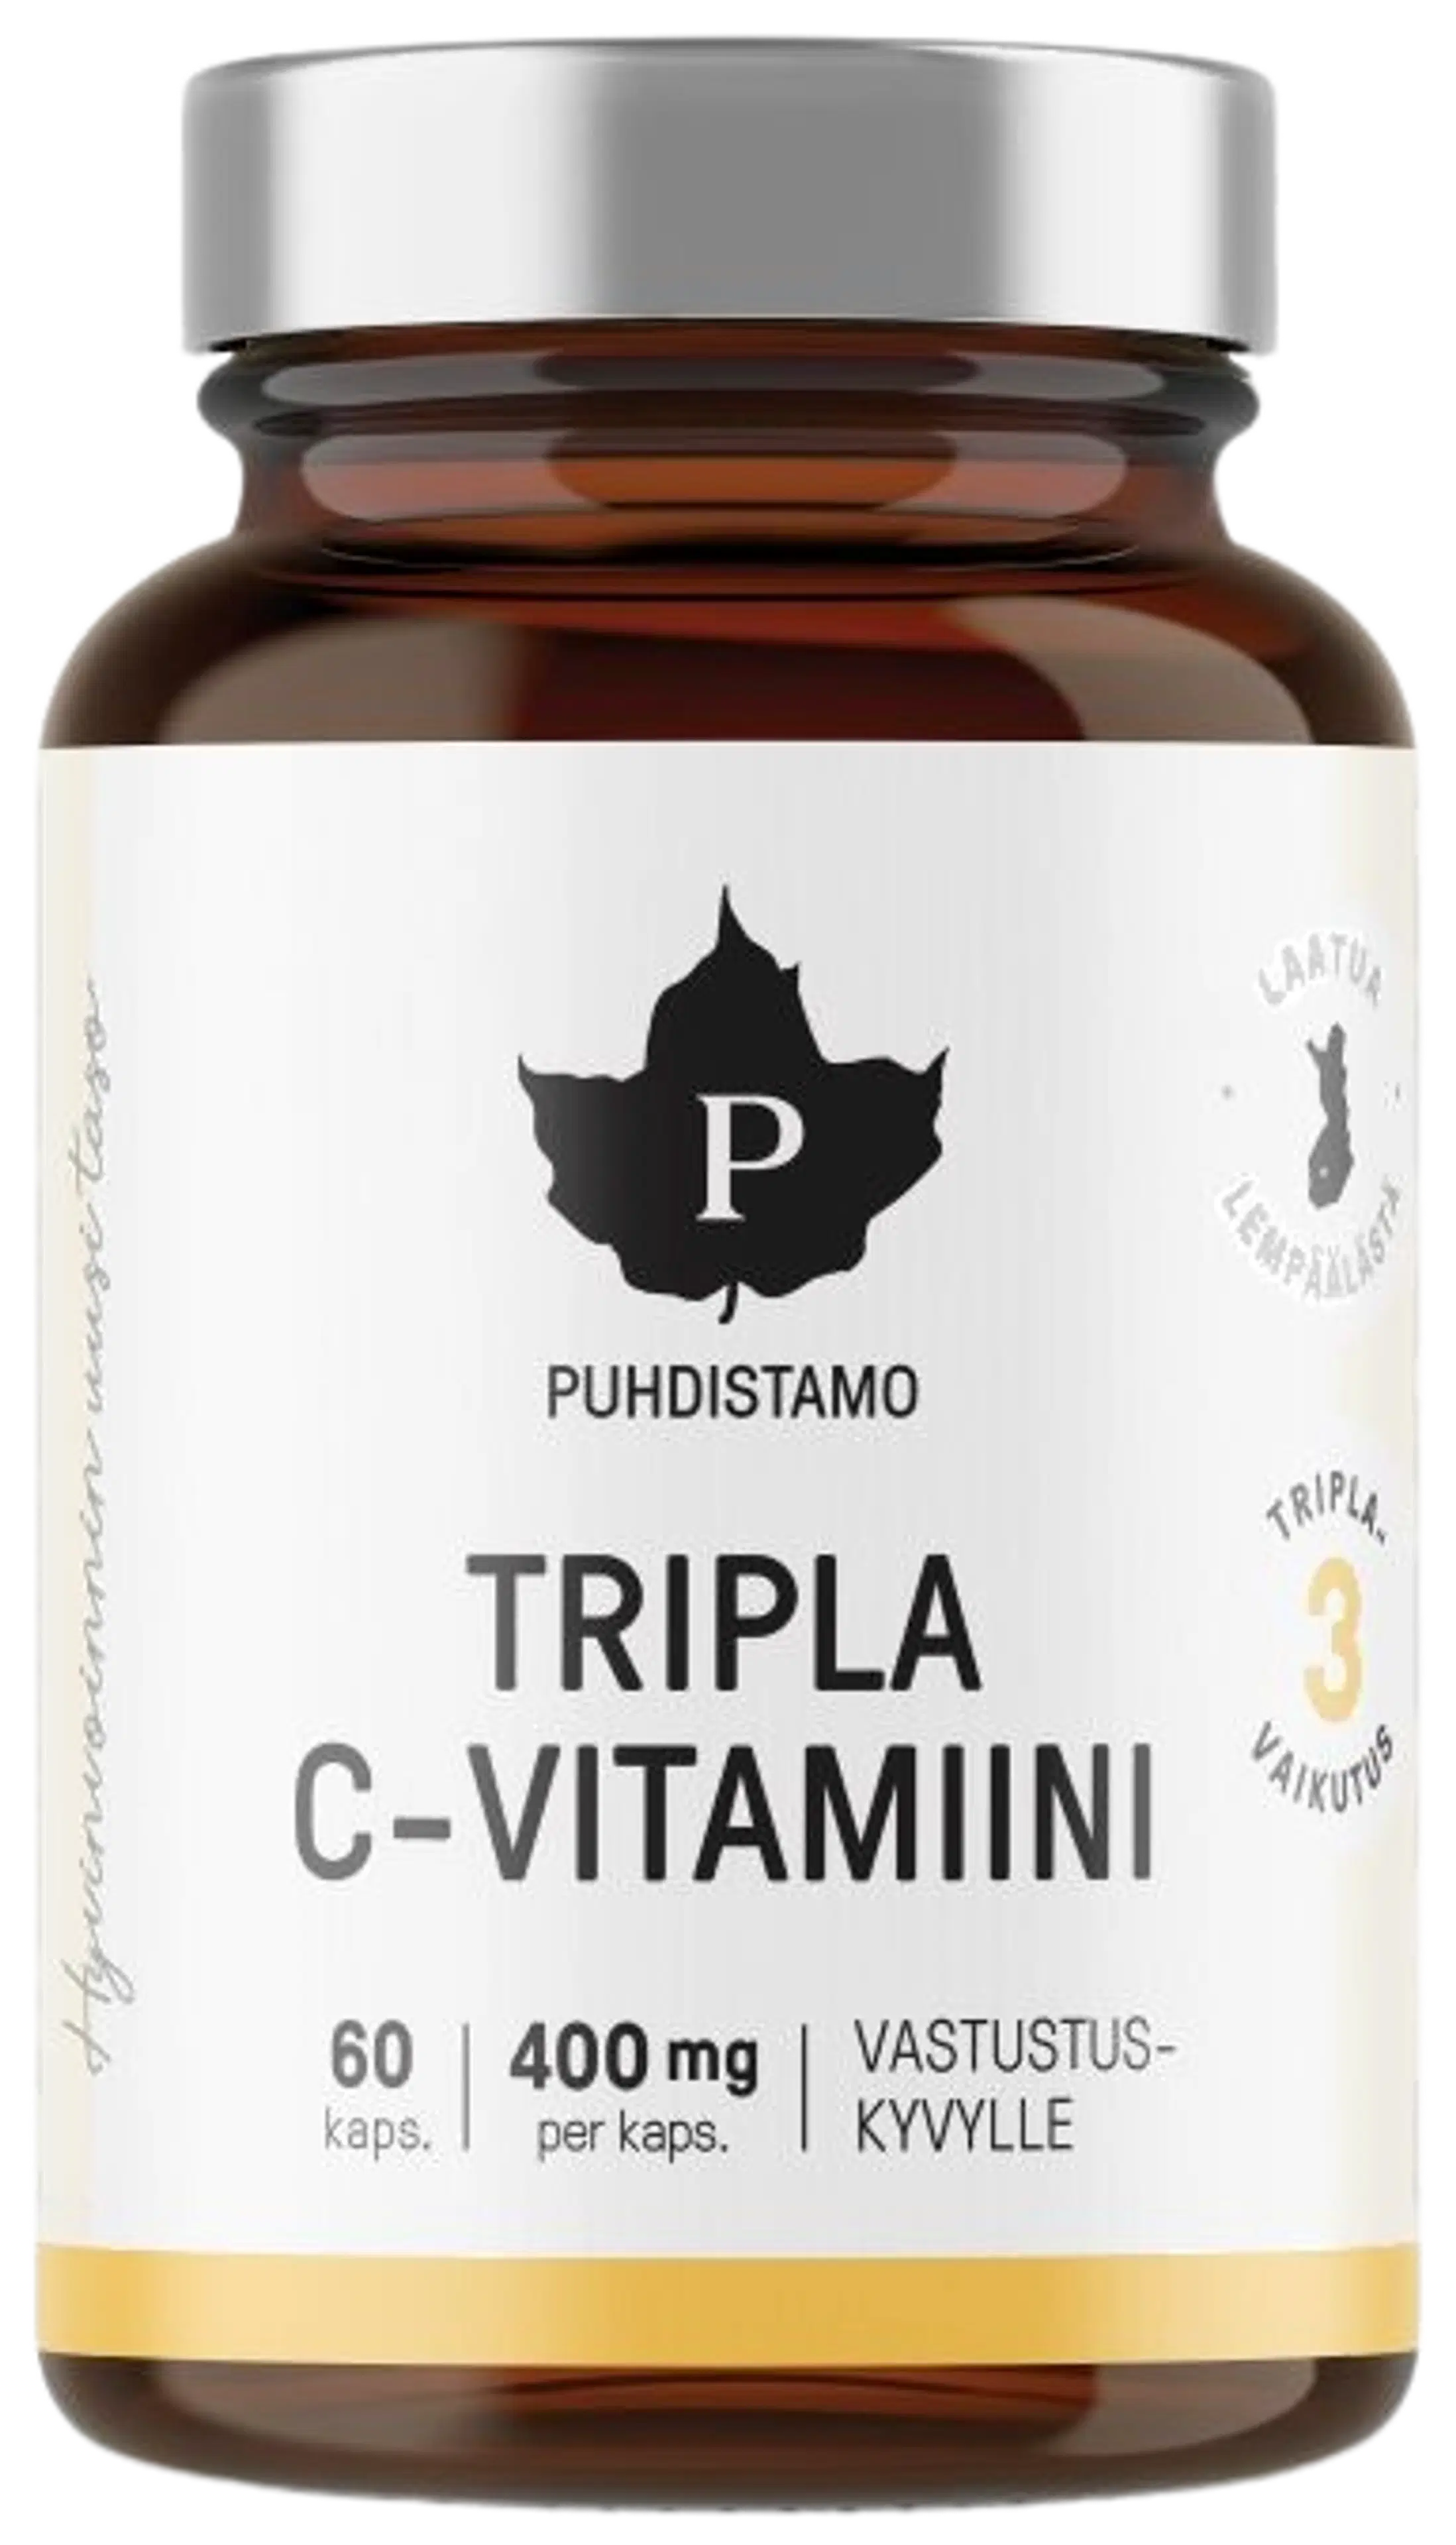 Puhdistamo Tripla C-vitamiini 400 mg 60 kapselia